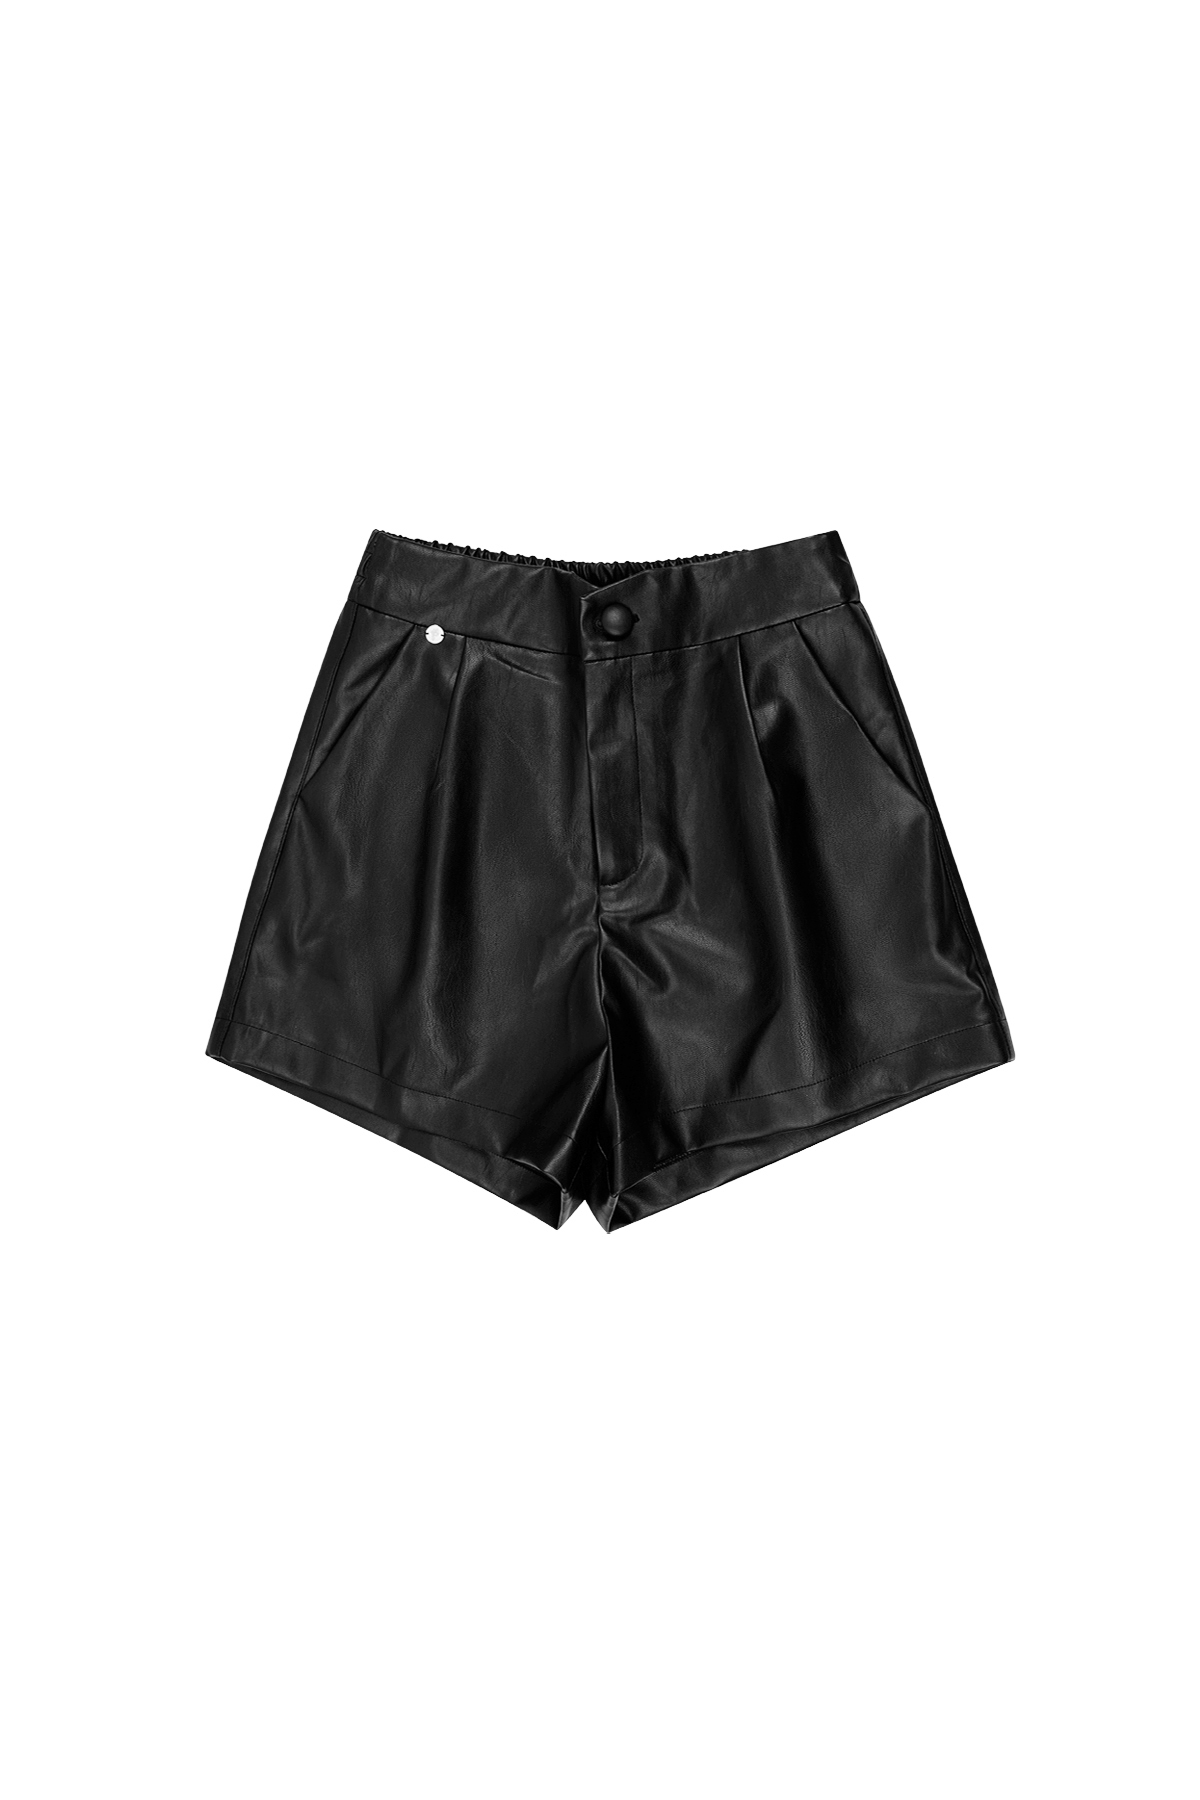 PU leather high waisted shorts - black